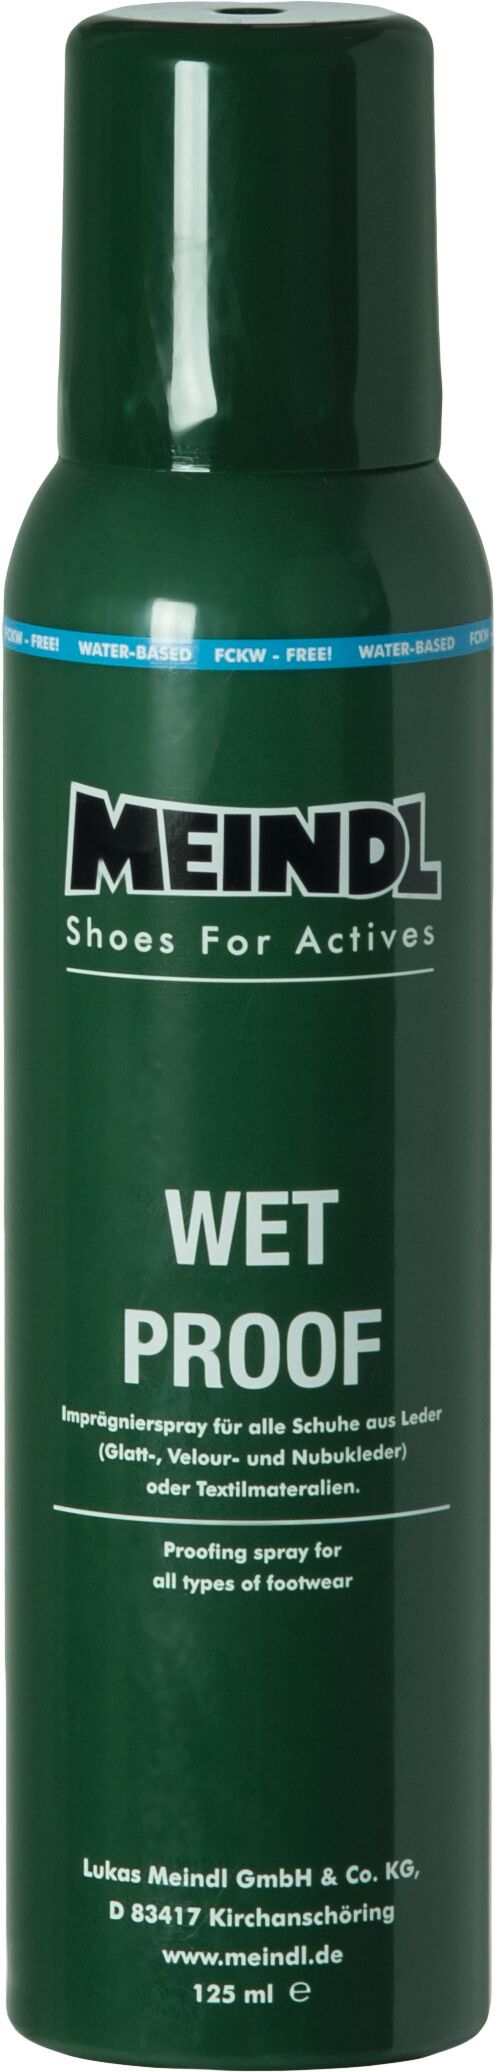 Meindl - Wet-Proof  - Shoe care